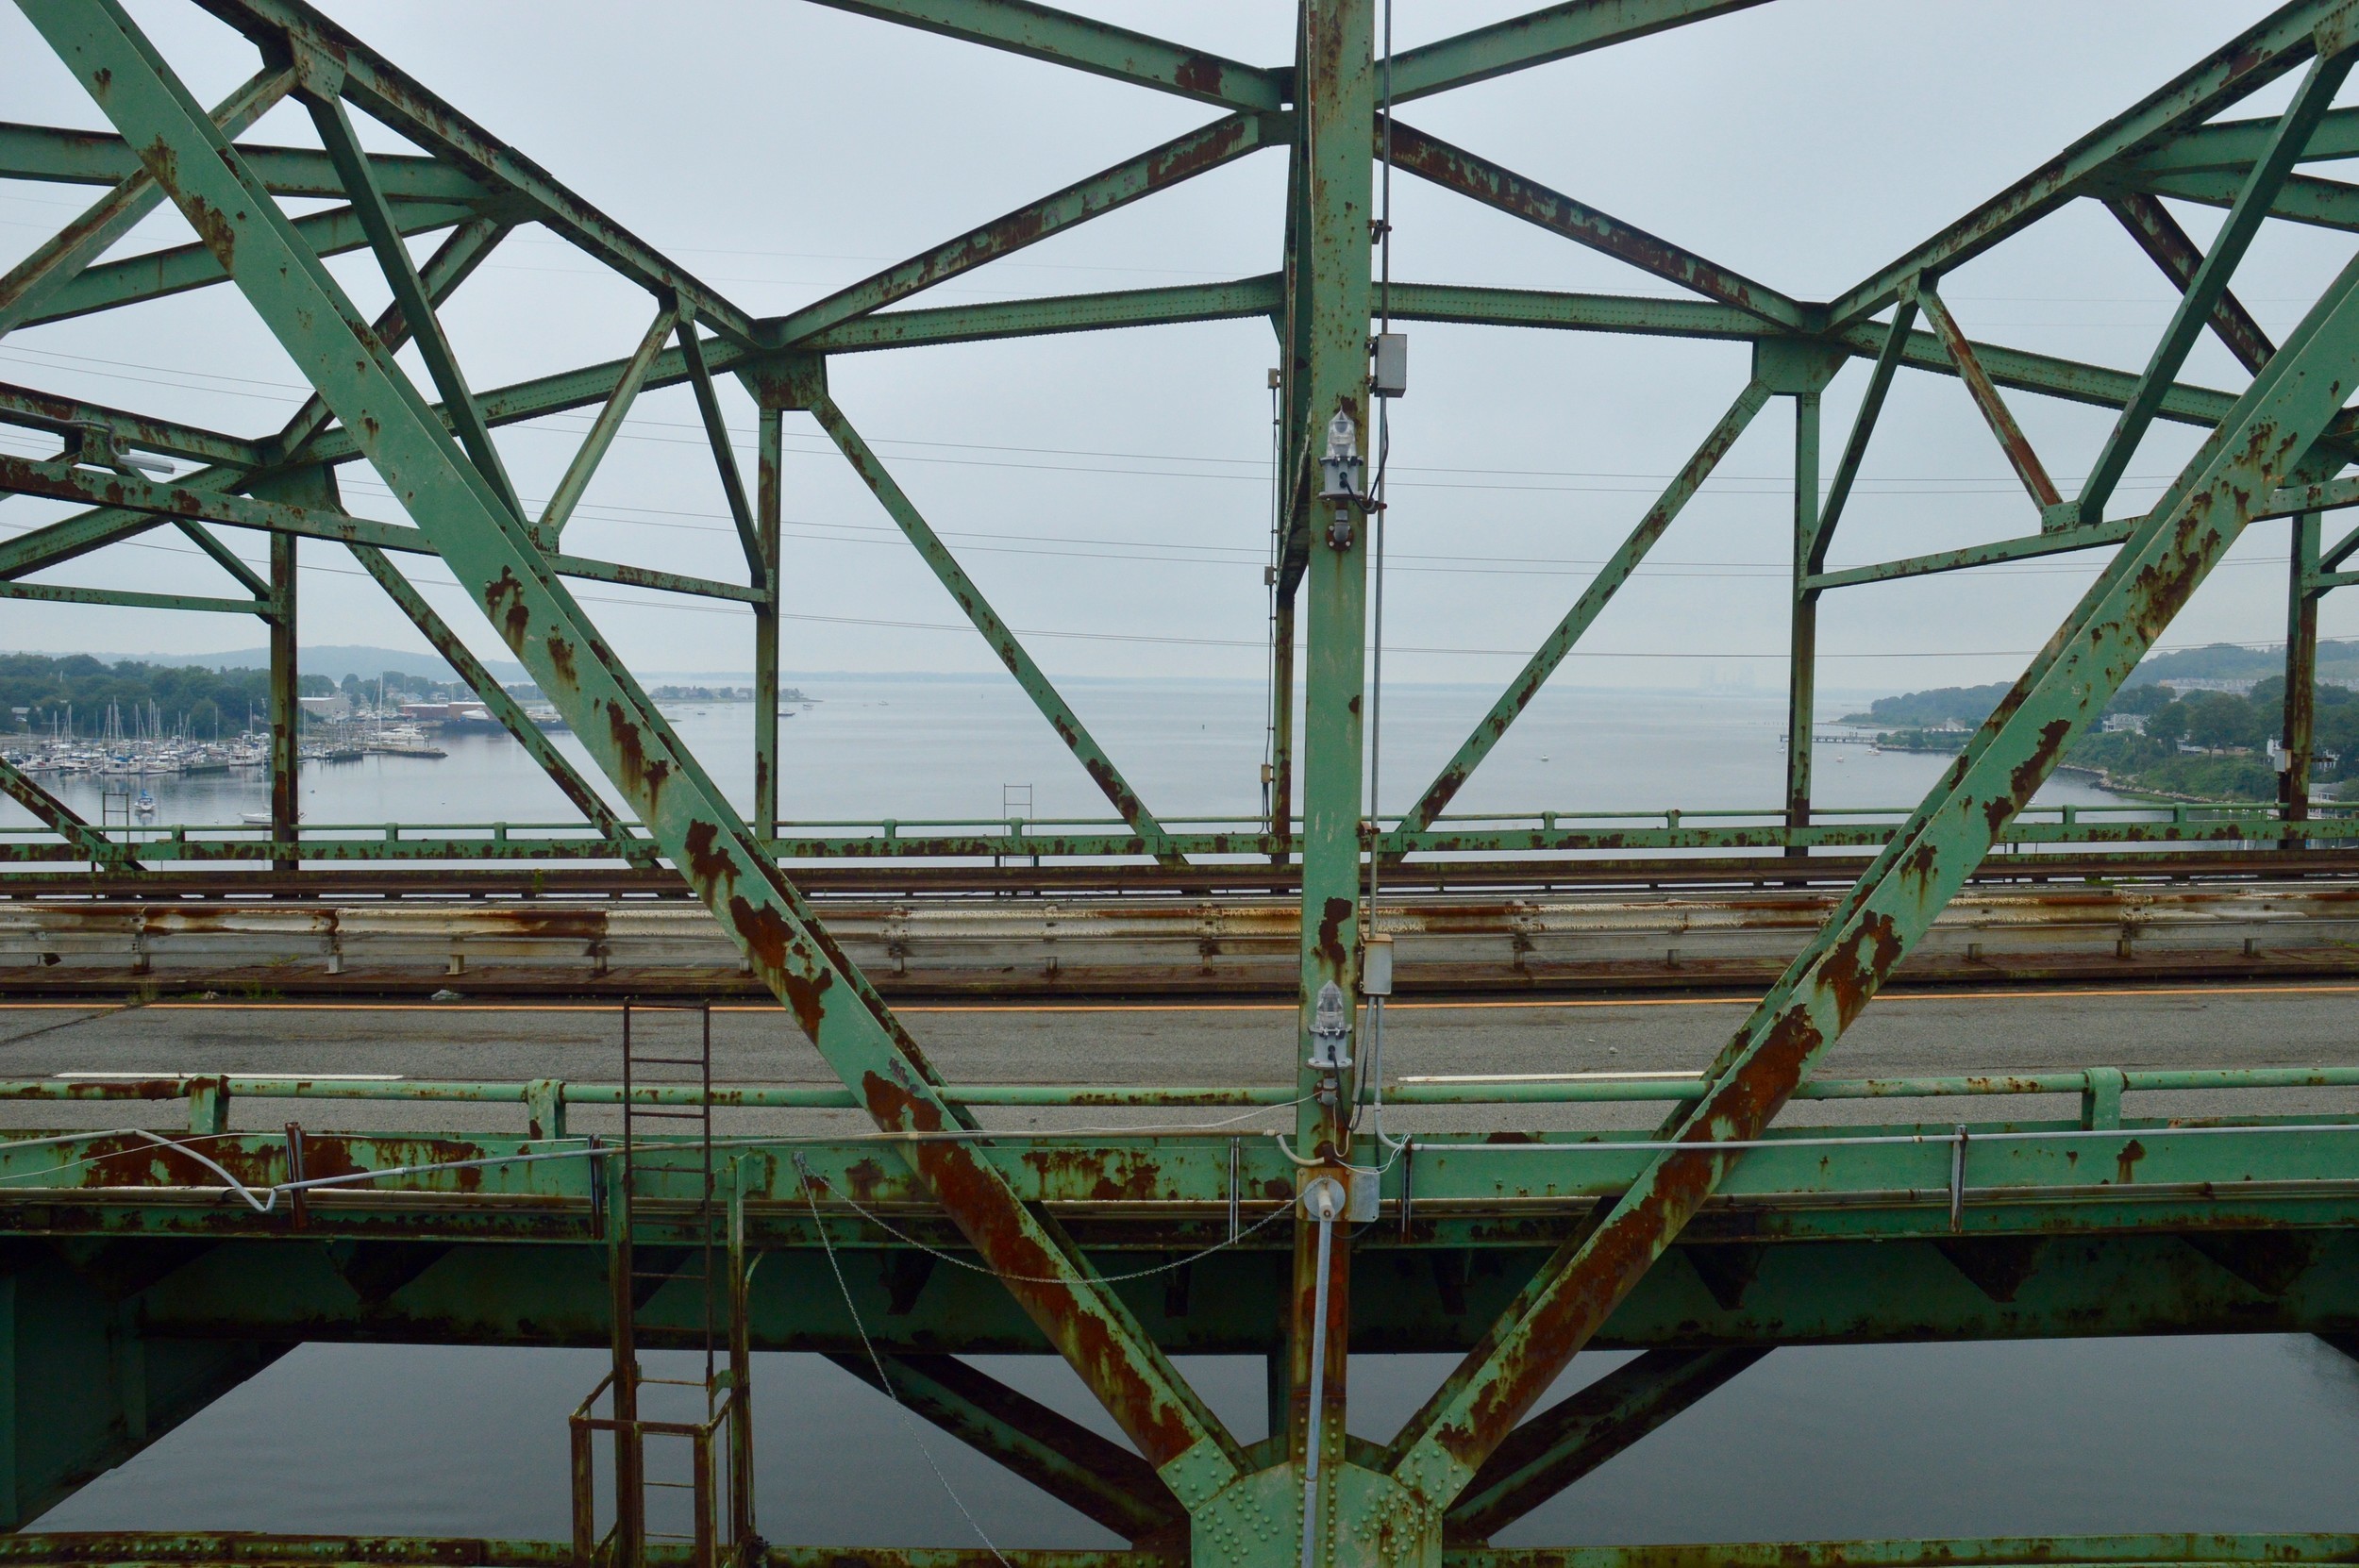 FINALLY: Rusty bridge is coming down | RhodyBeat